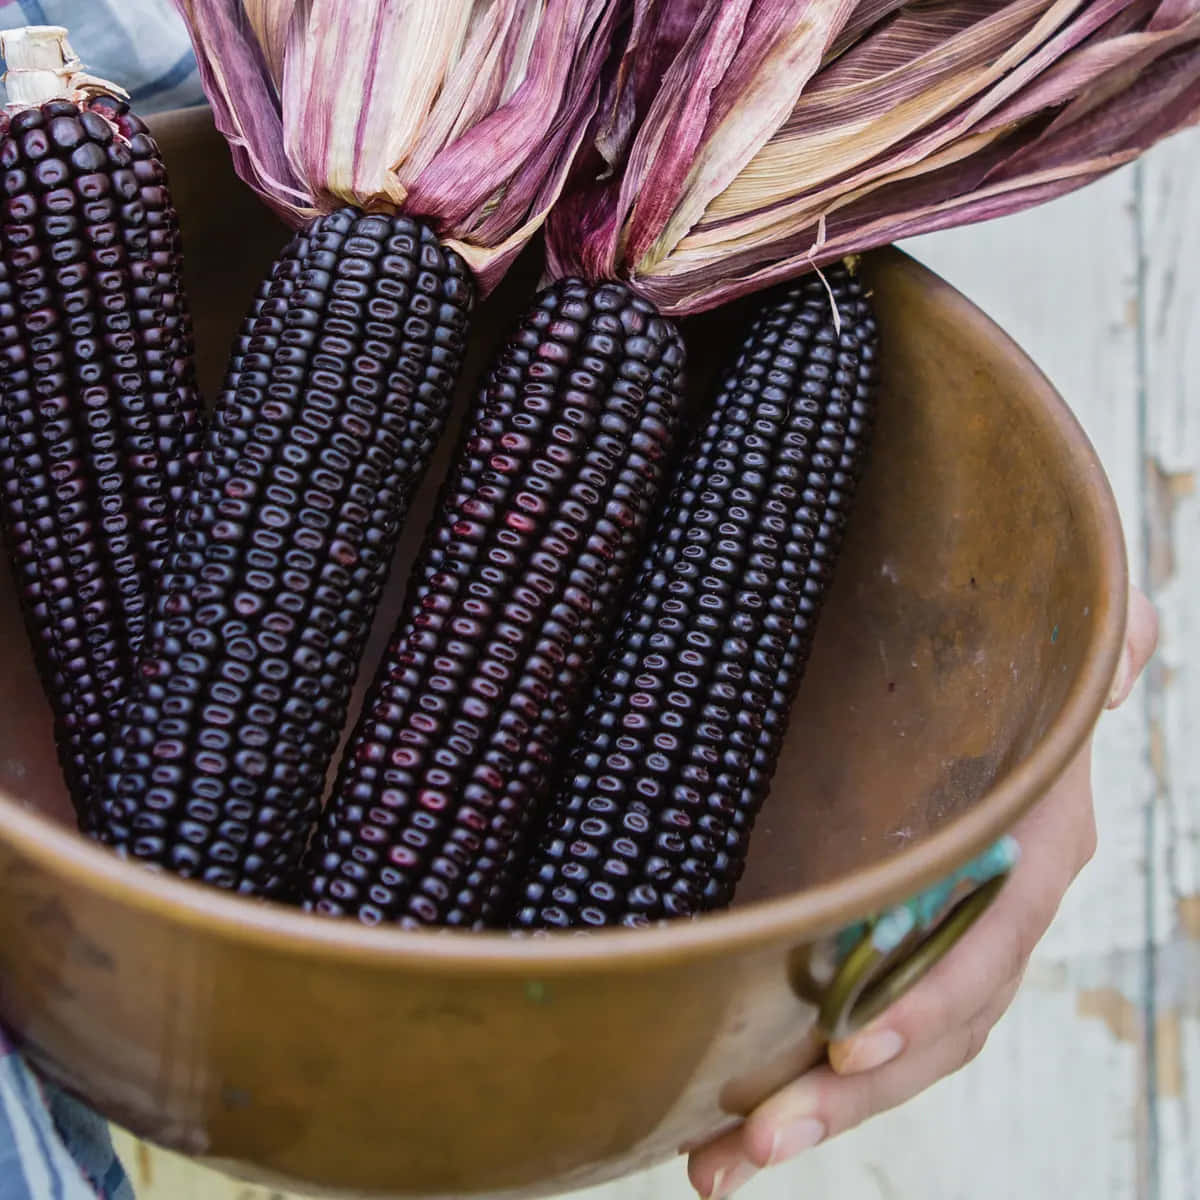 Enjoy the delicious, unique flavor of purple corn Wallpaper